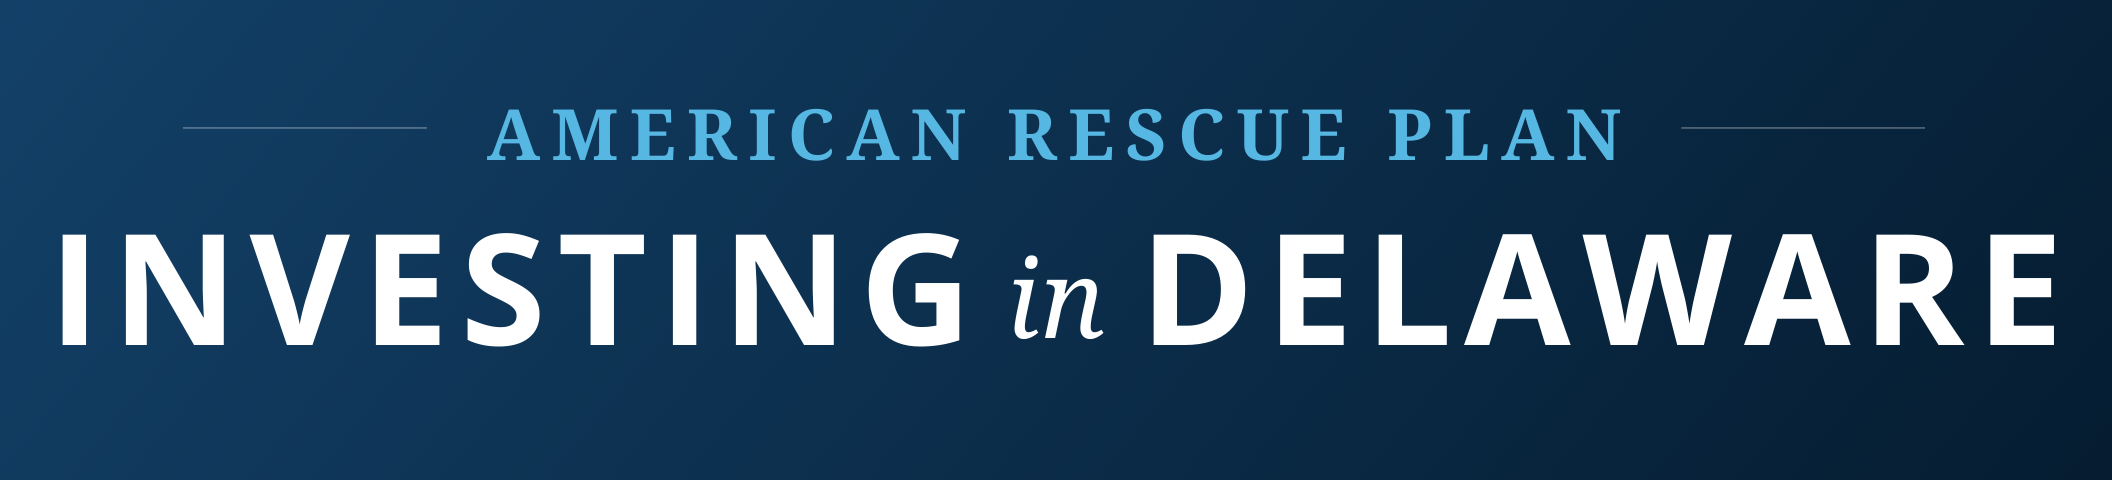 American Rescue Plan Logo: Investing in Delaware